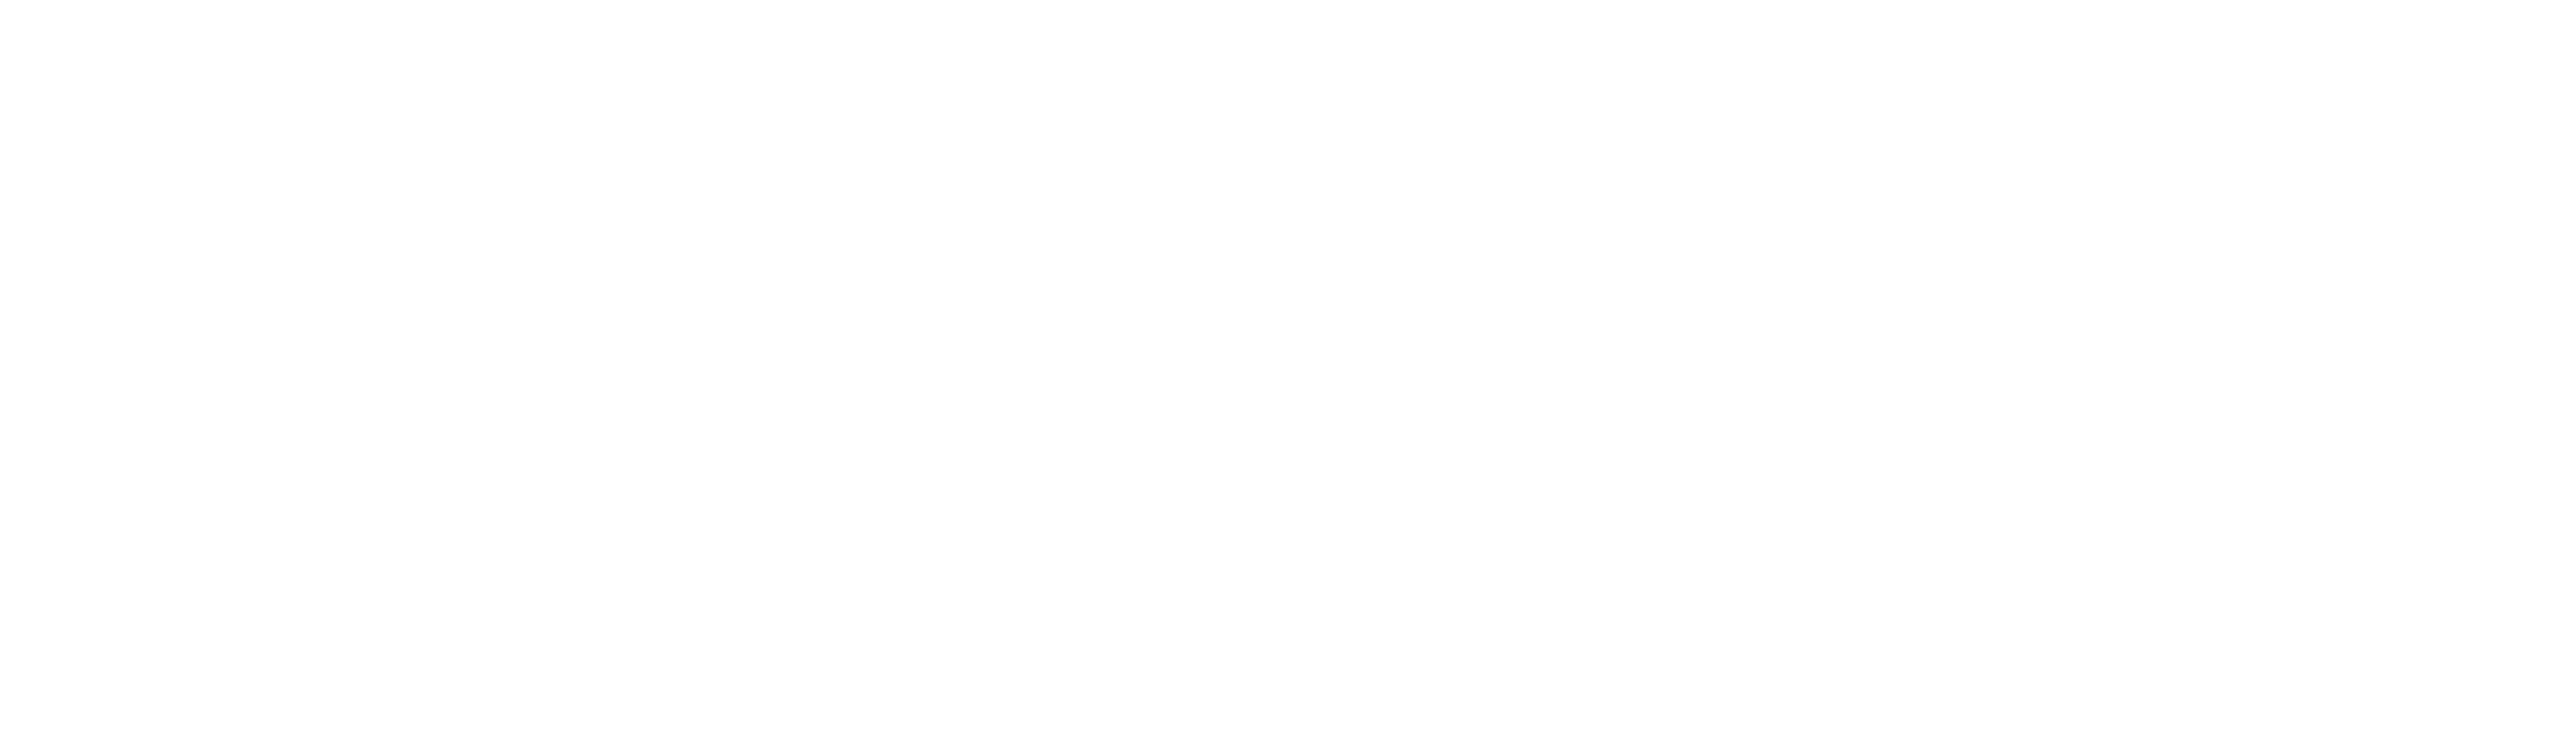 Studio 13 | Signs and Graphics